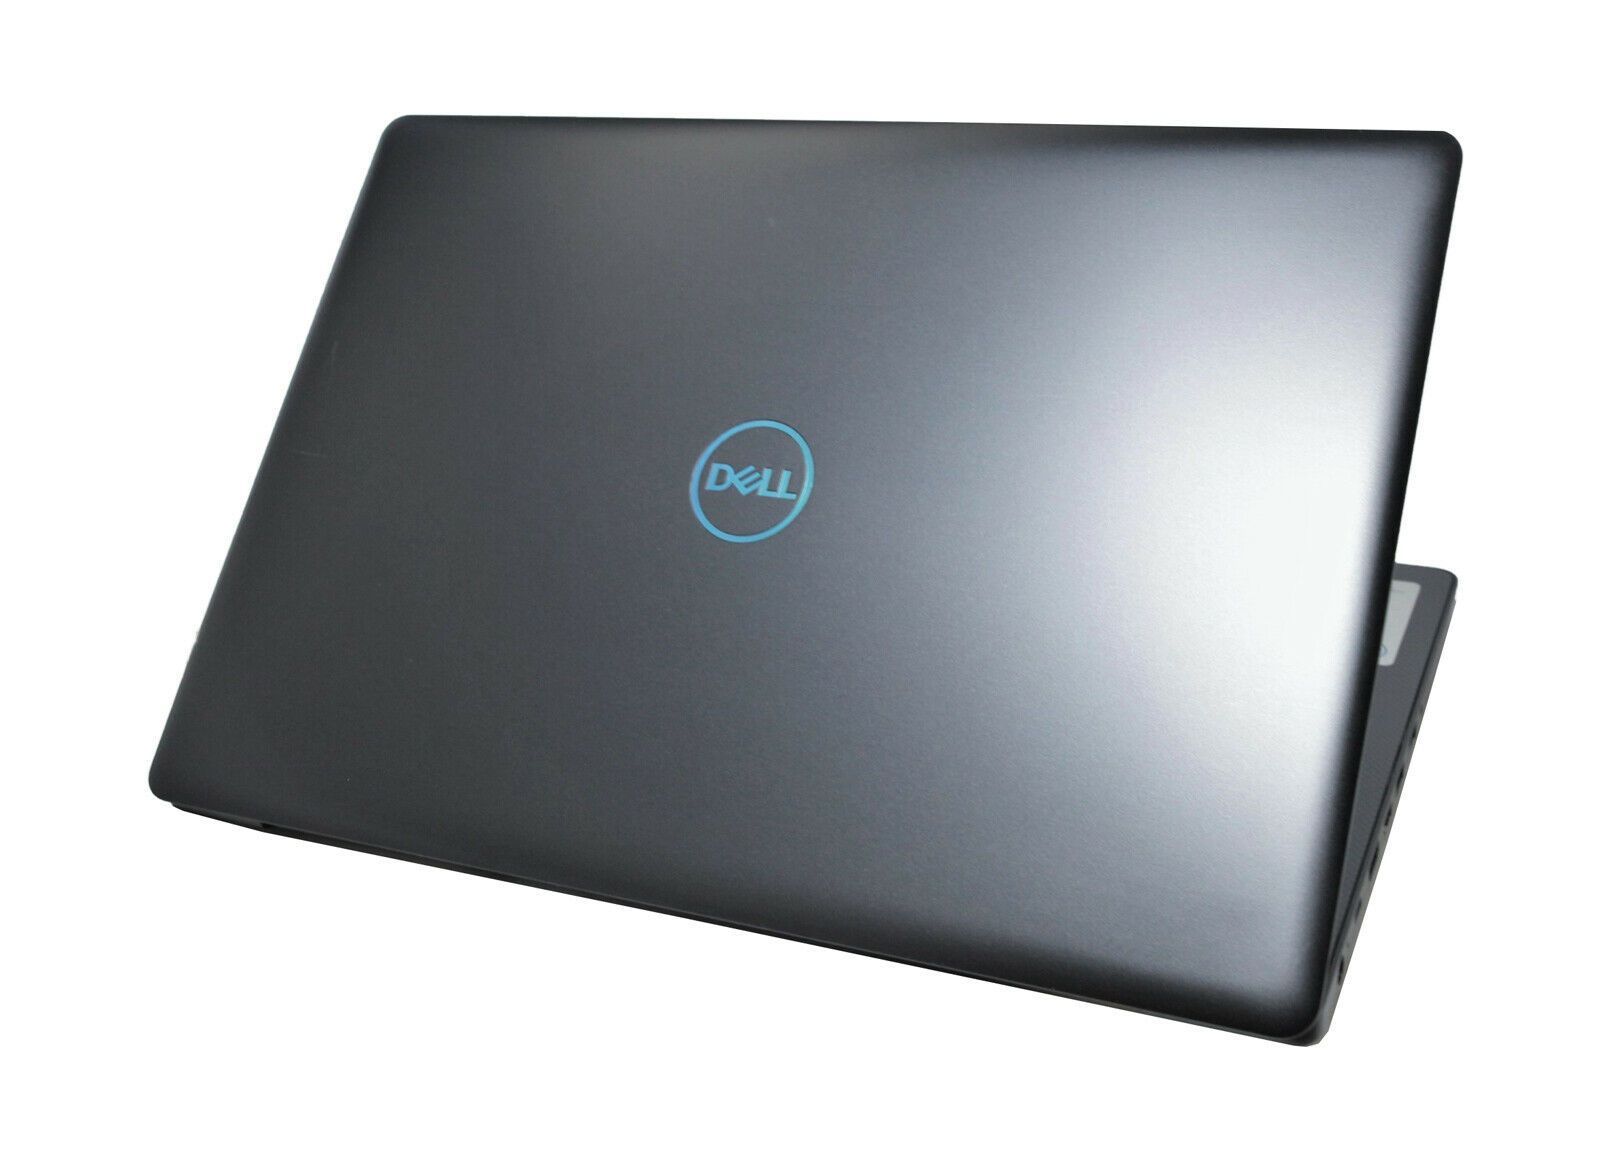 Dell G3 15 Ips Gaming Laptop Core I7 8750h Gtx 1060 Max Q 128gb 1tb 8gb Ram Cruisetech